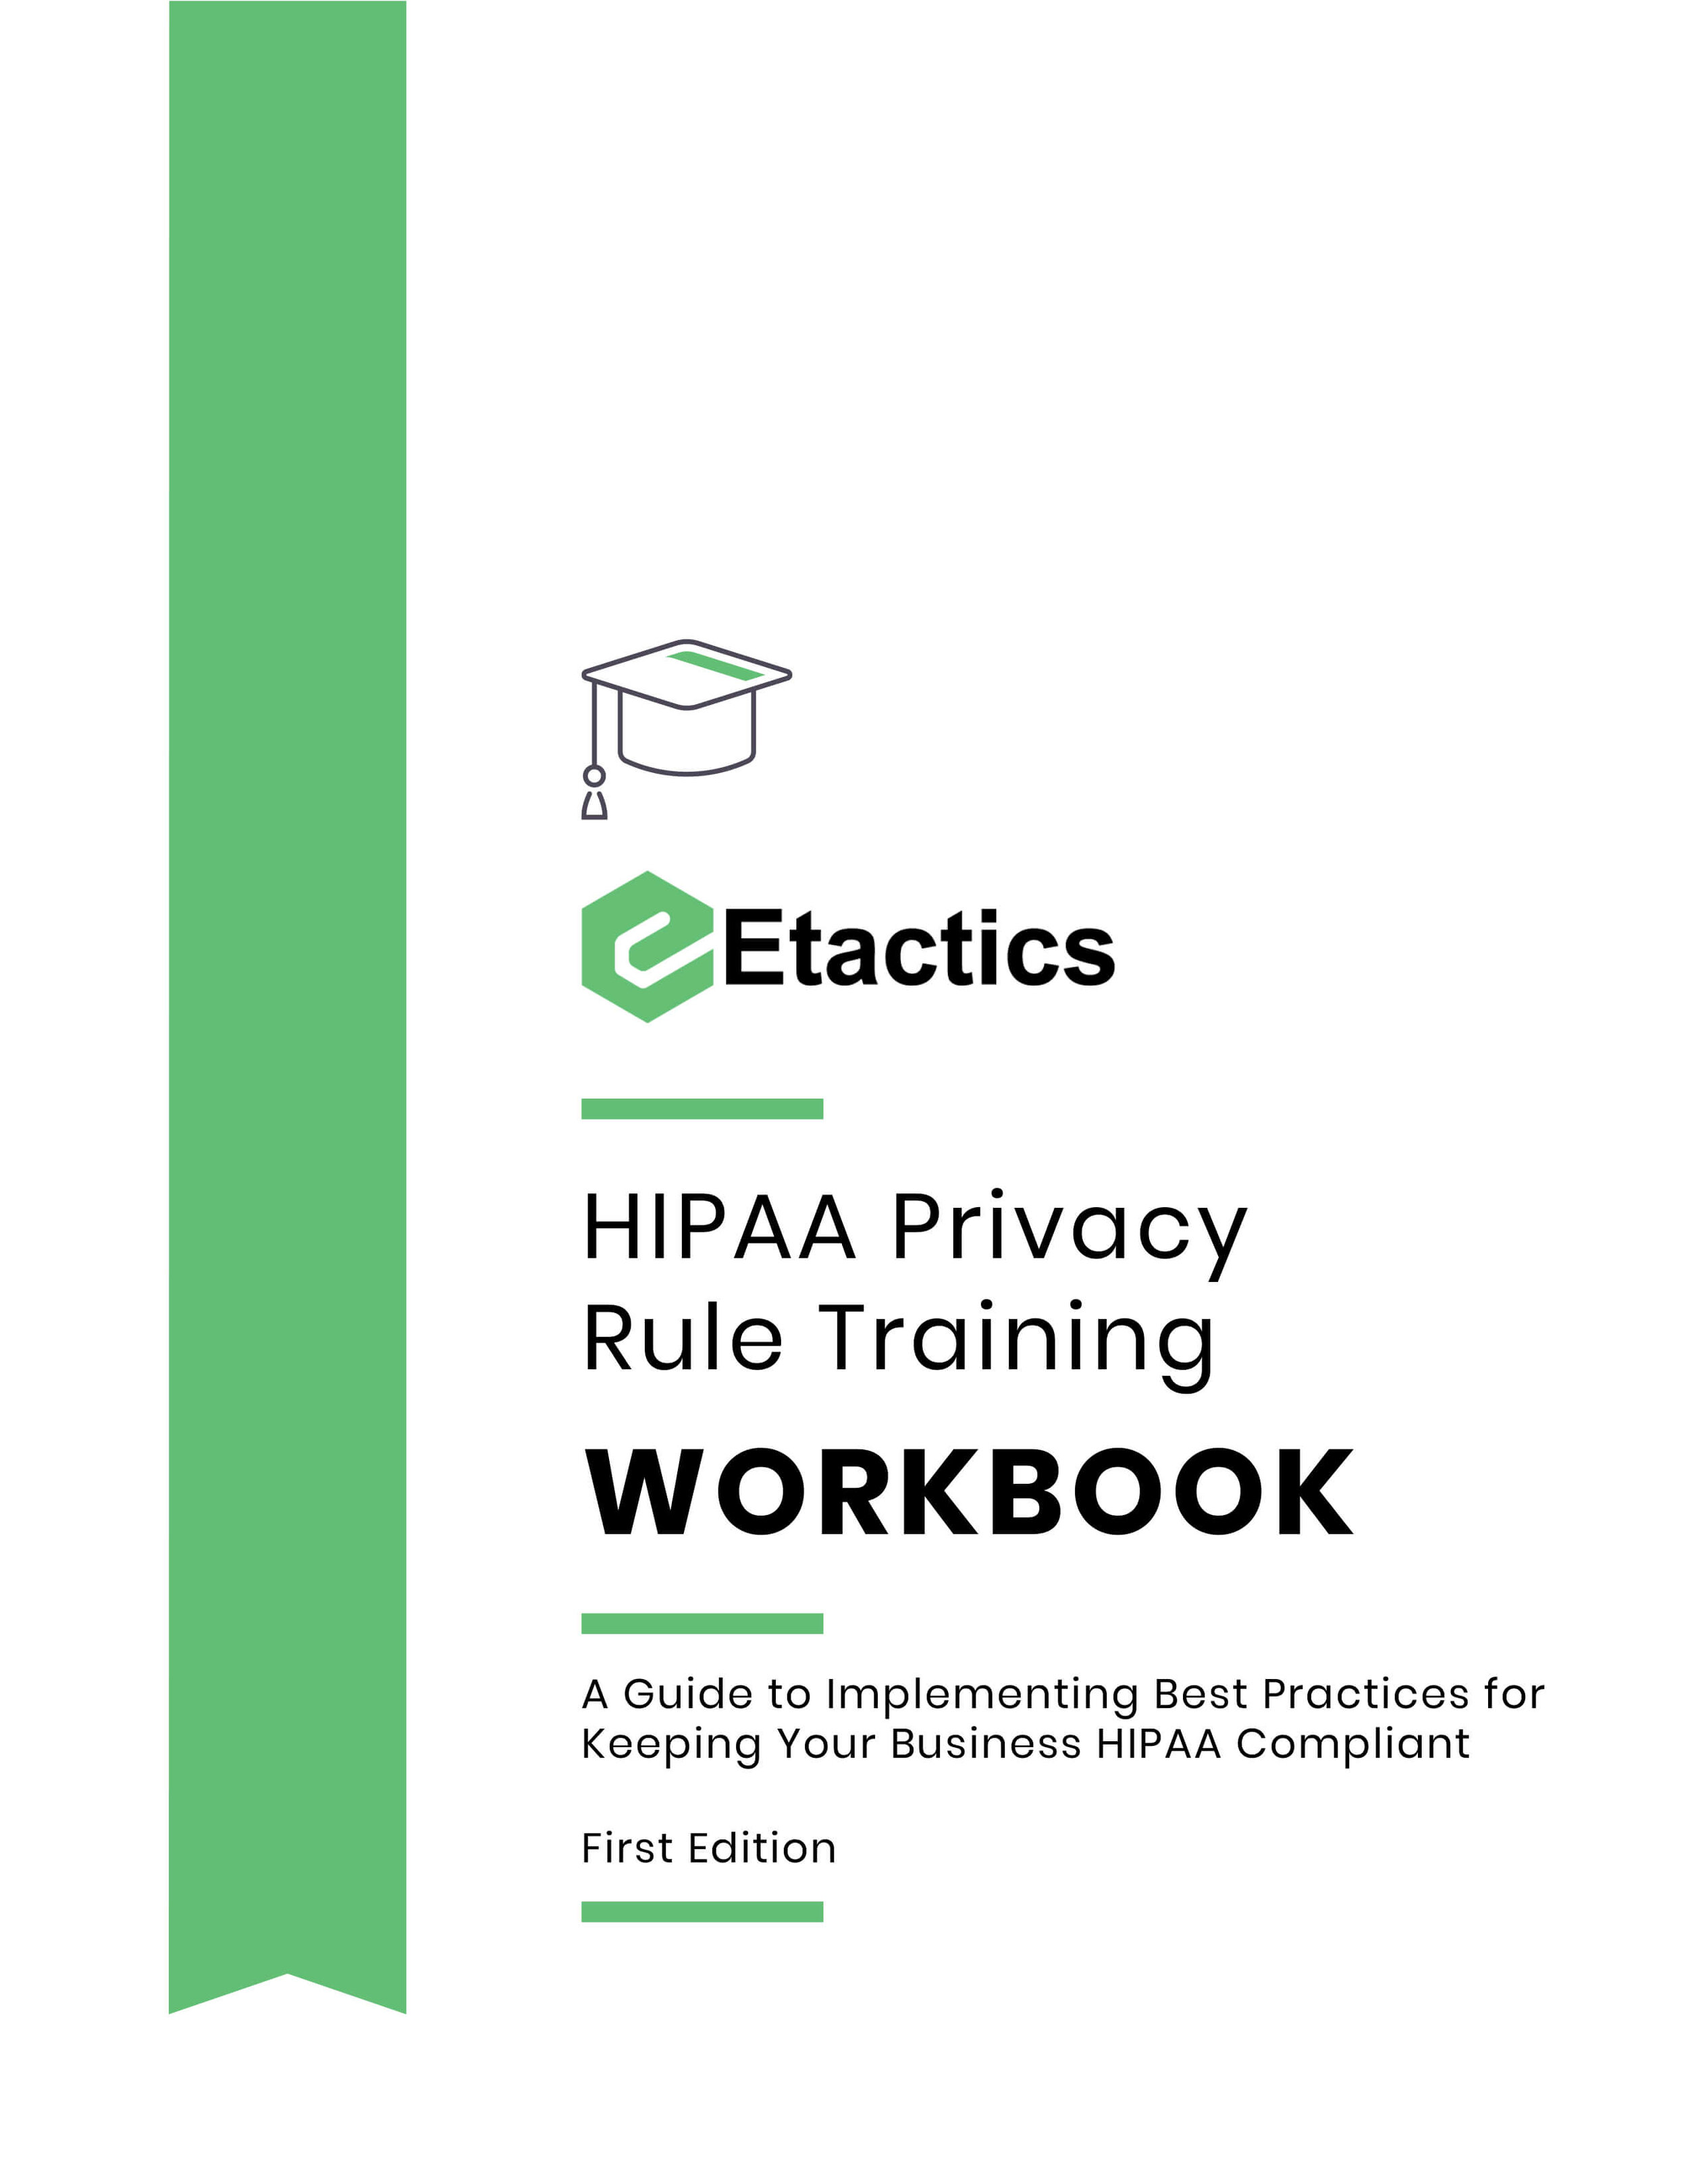 HIPAA Training Workbook-1.jpg